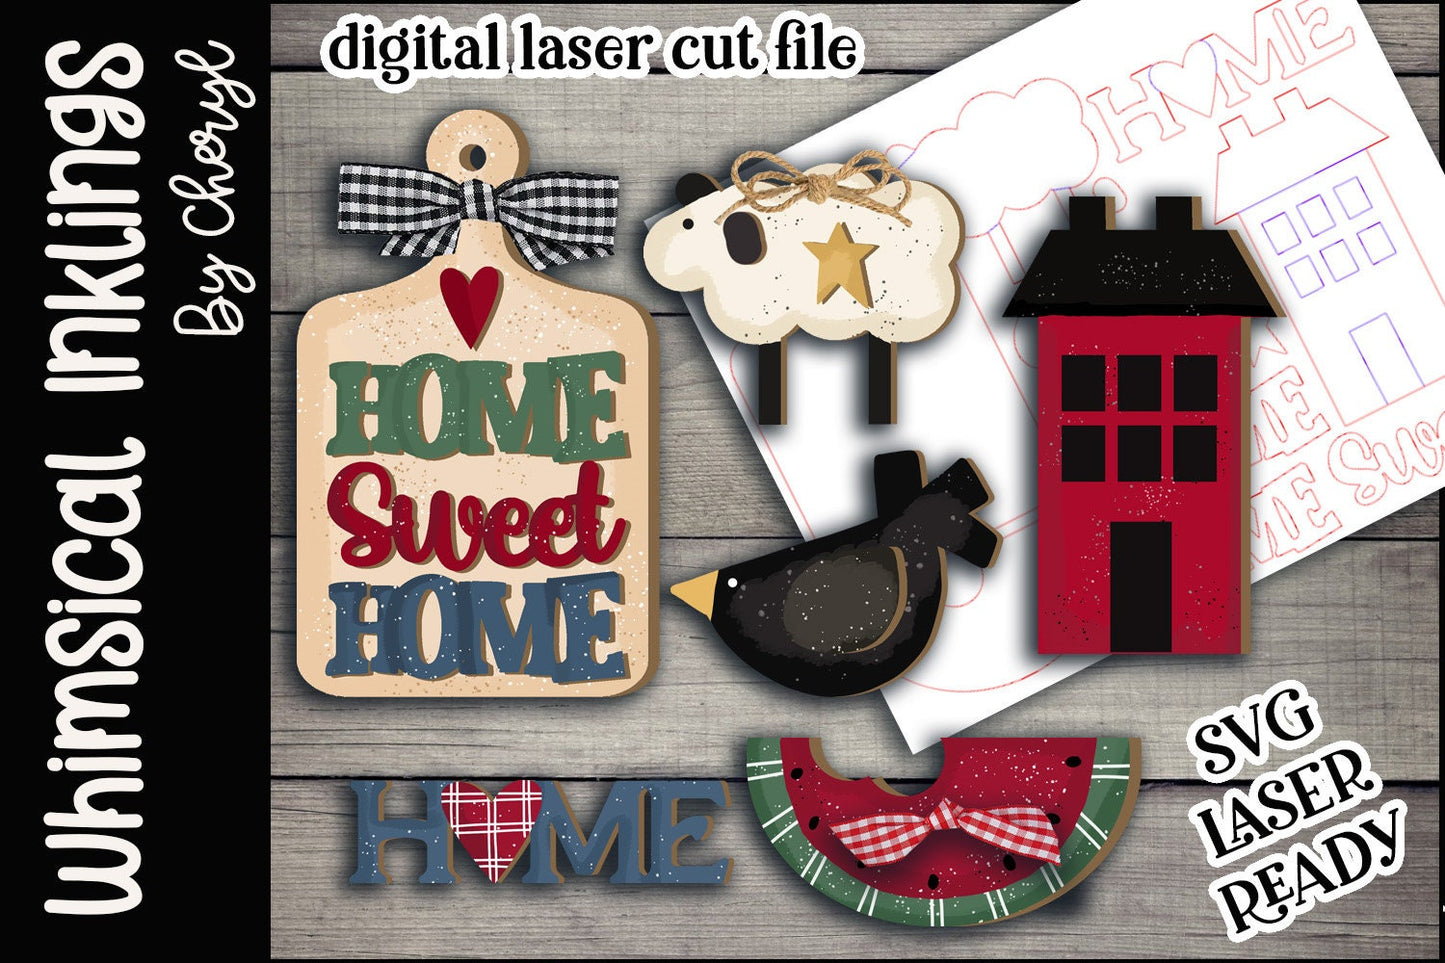 Prim Home SVG |Laser Ready Prim Home| Glow Forge Folk-art| Summer Tiered Tray SVG